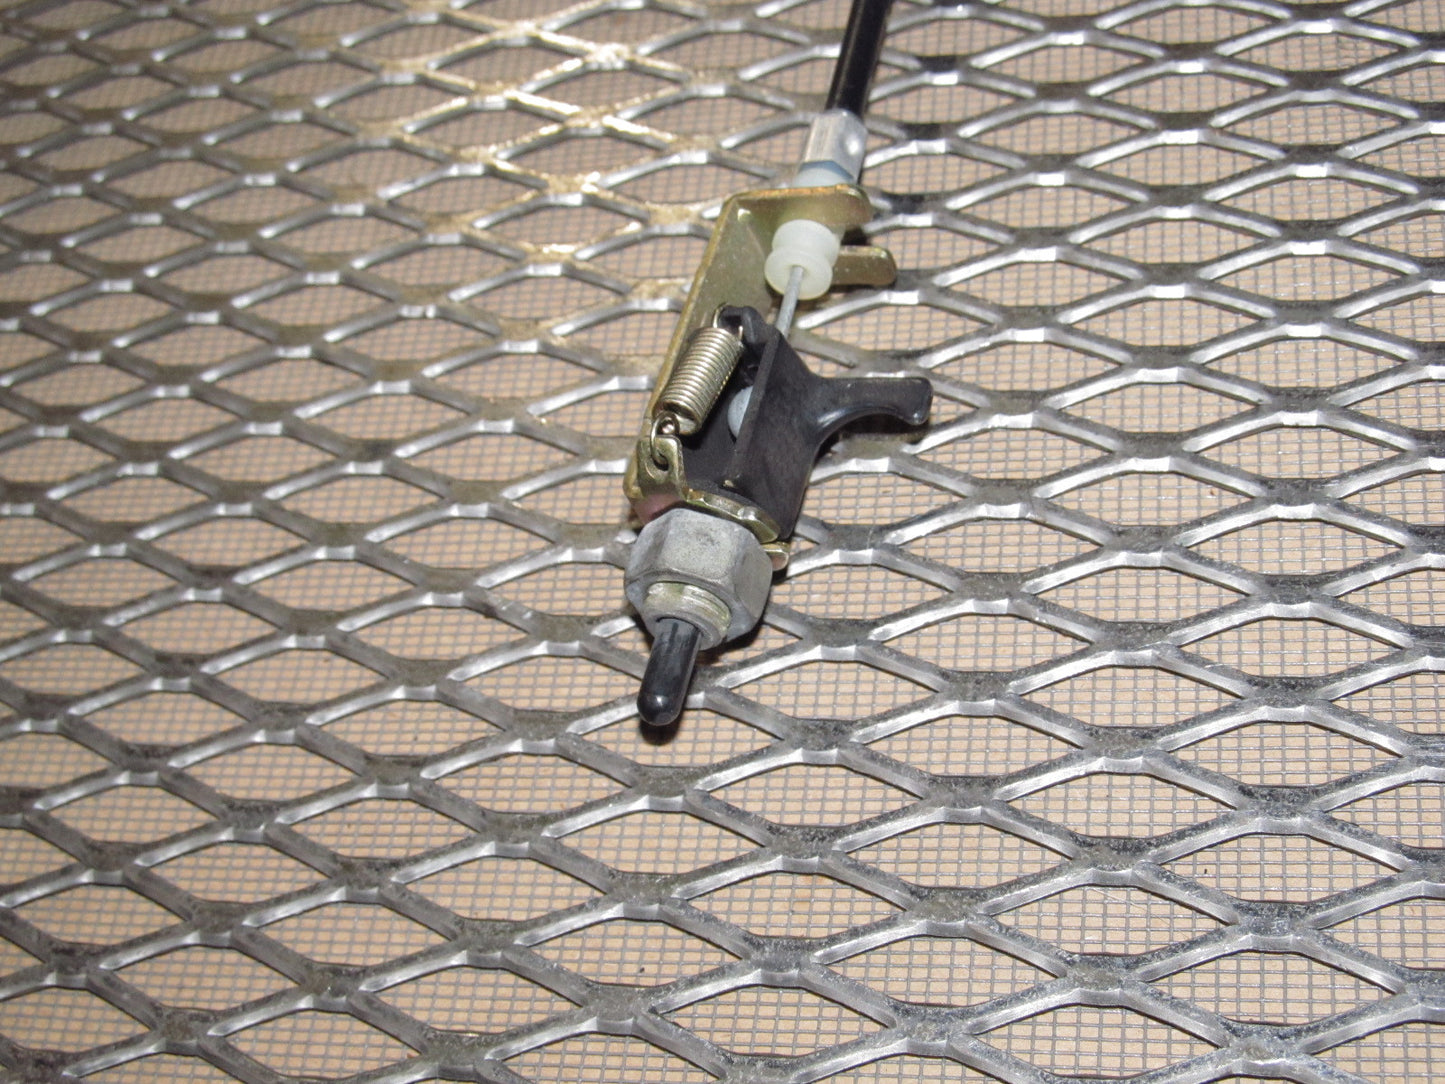 04 05 06 07 08 Mazda RX8 OEM Gas Door Release Cable